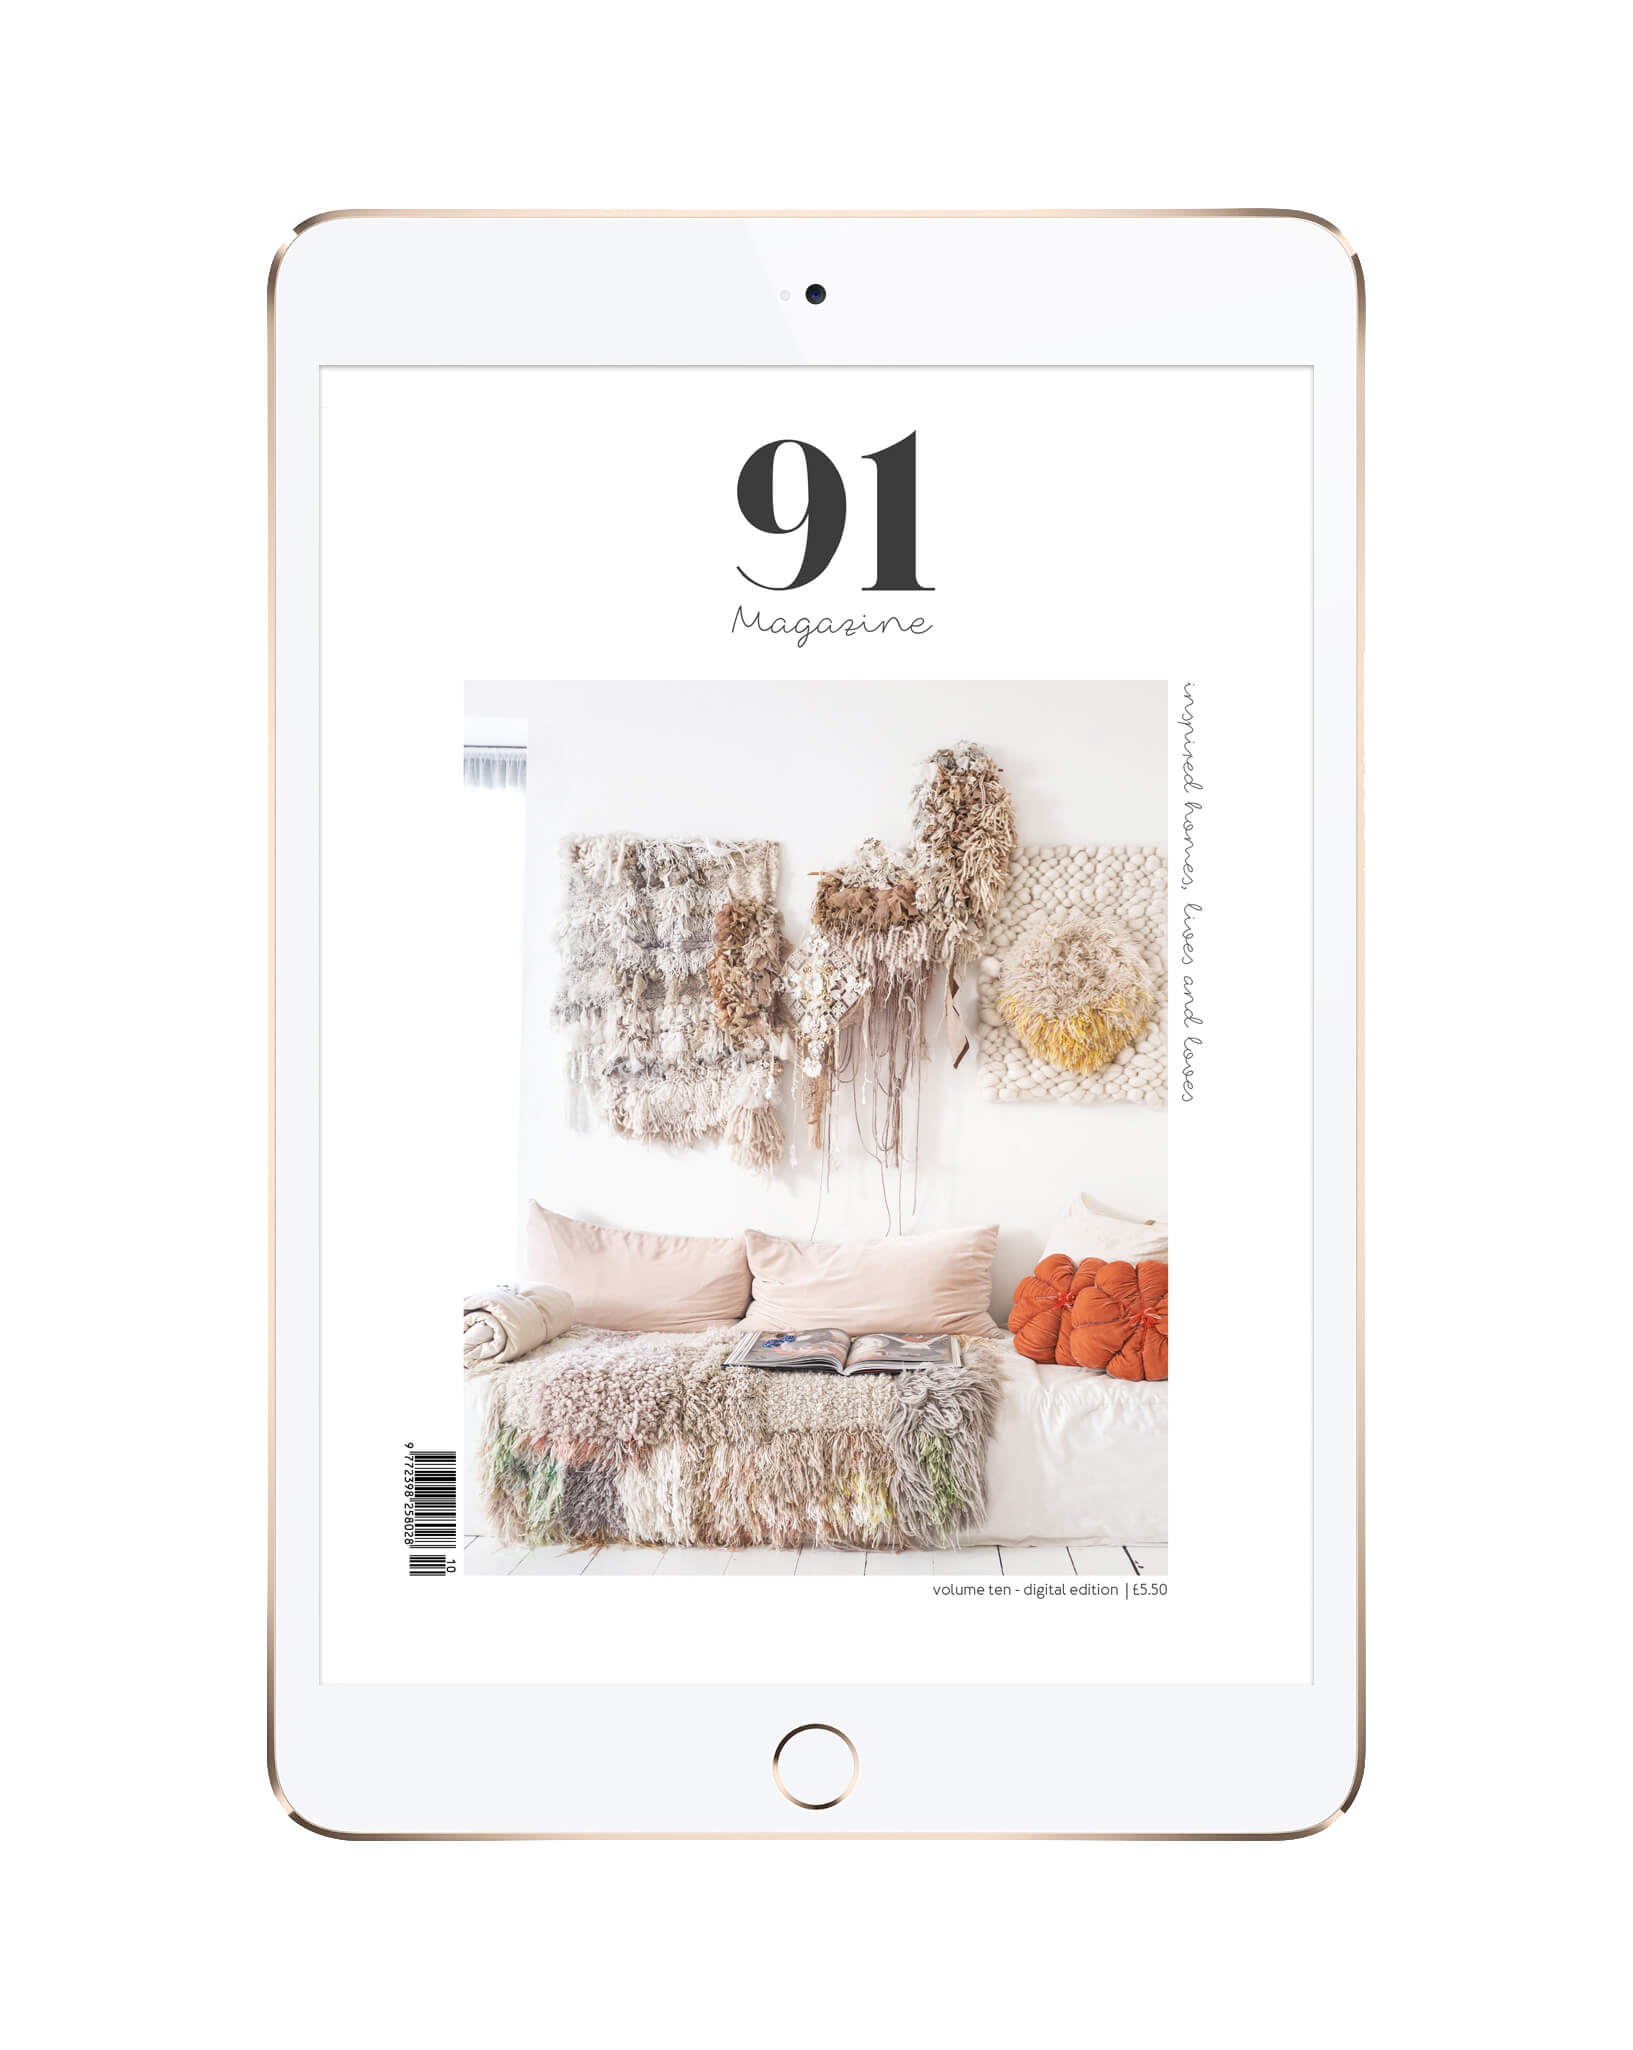 91 Magazine Volume 10 - digital version